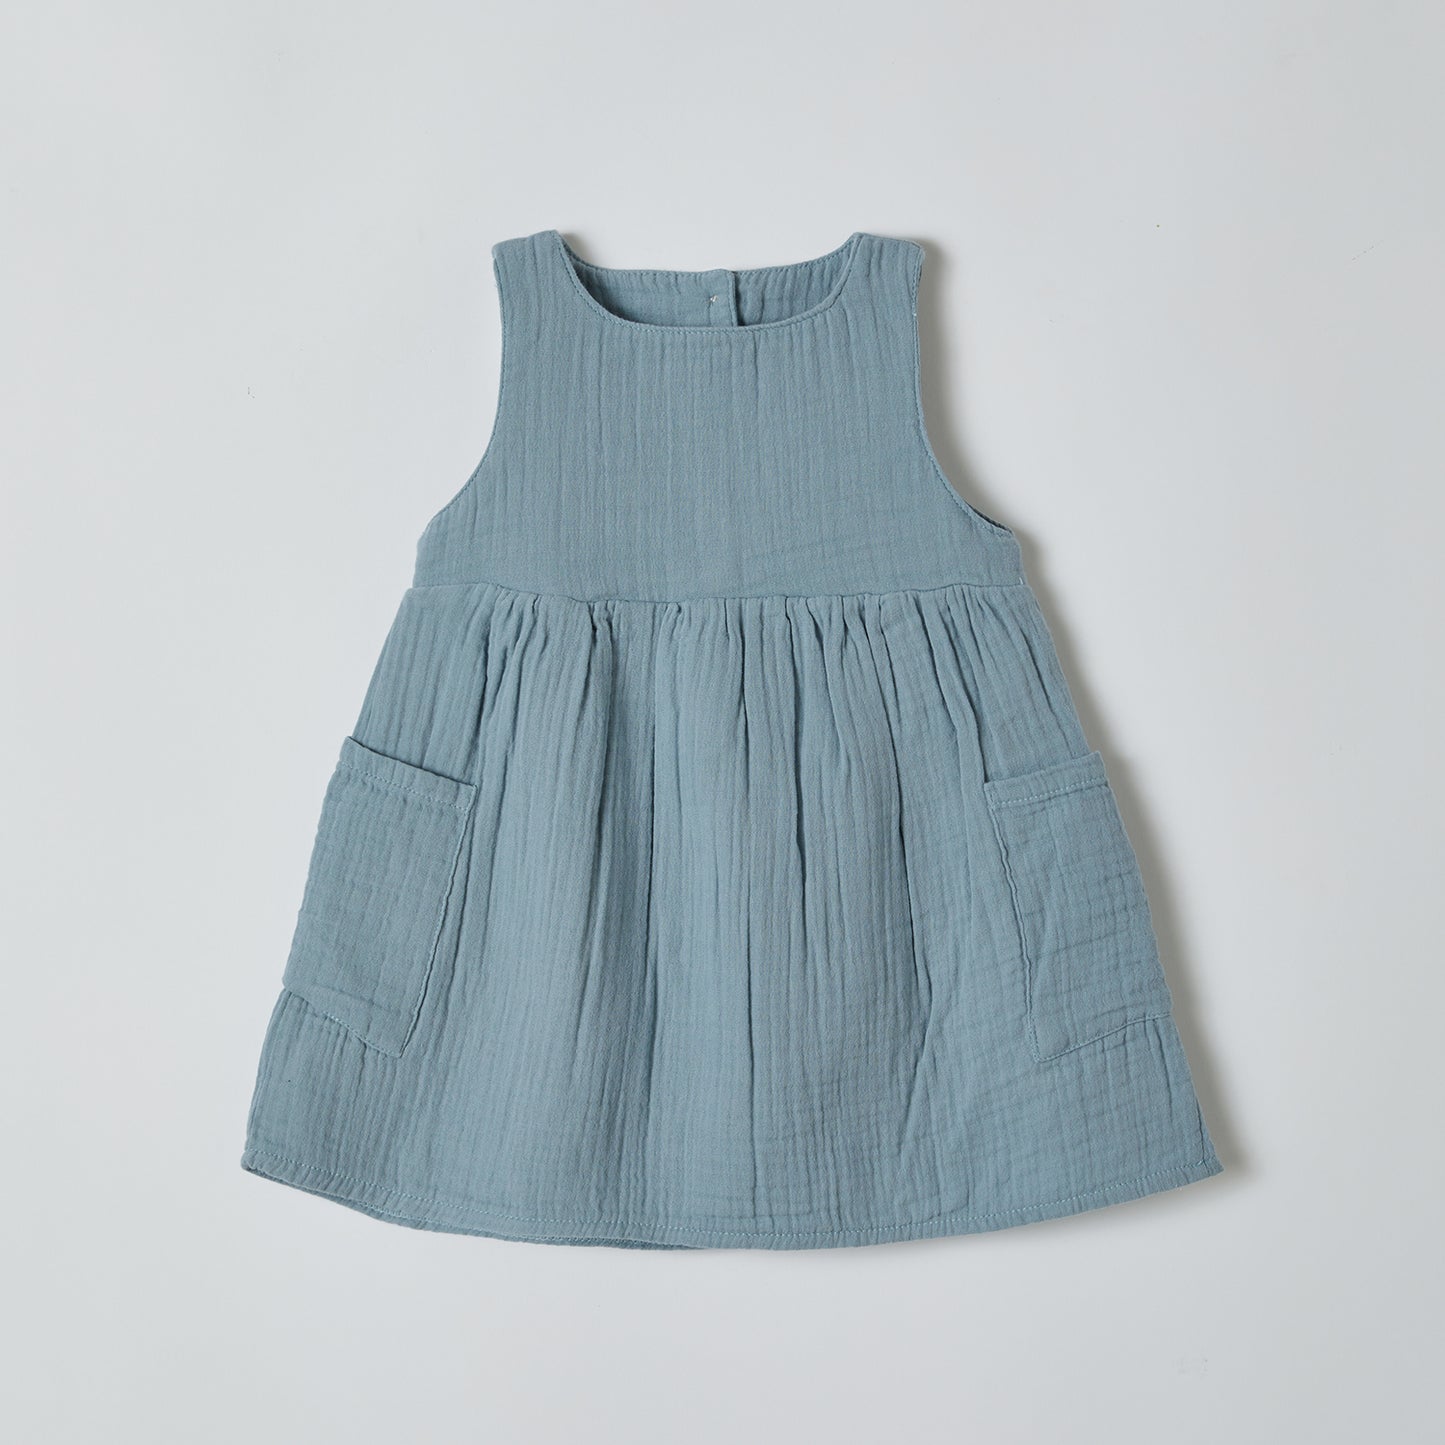 Organic Muslin Girl's Sleeveless dress colored Aqua- Aged 6m to 6 Years